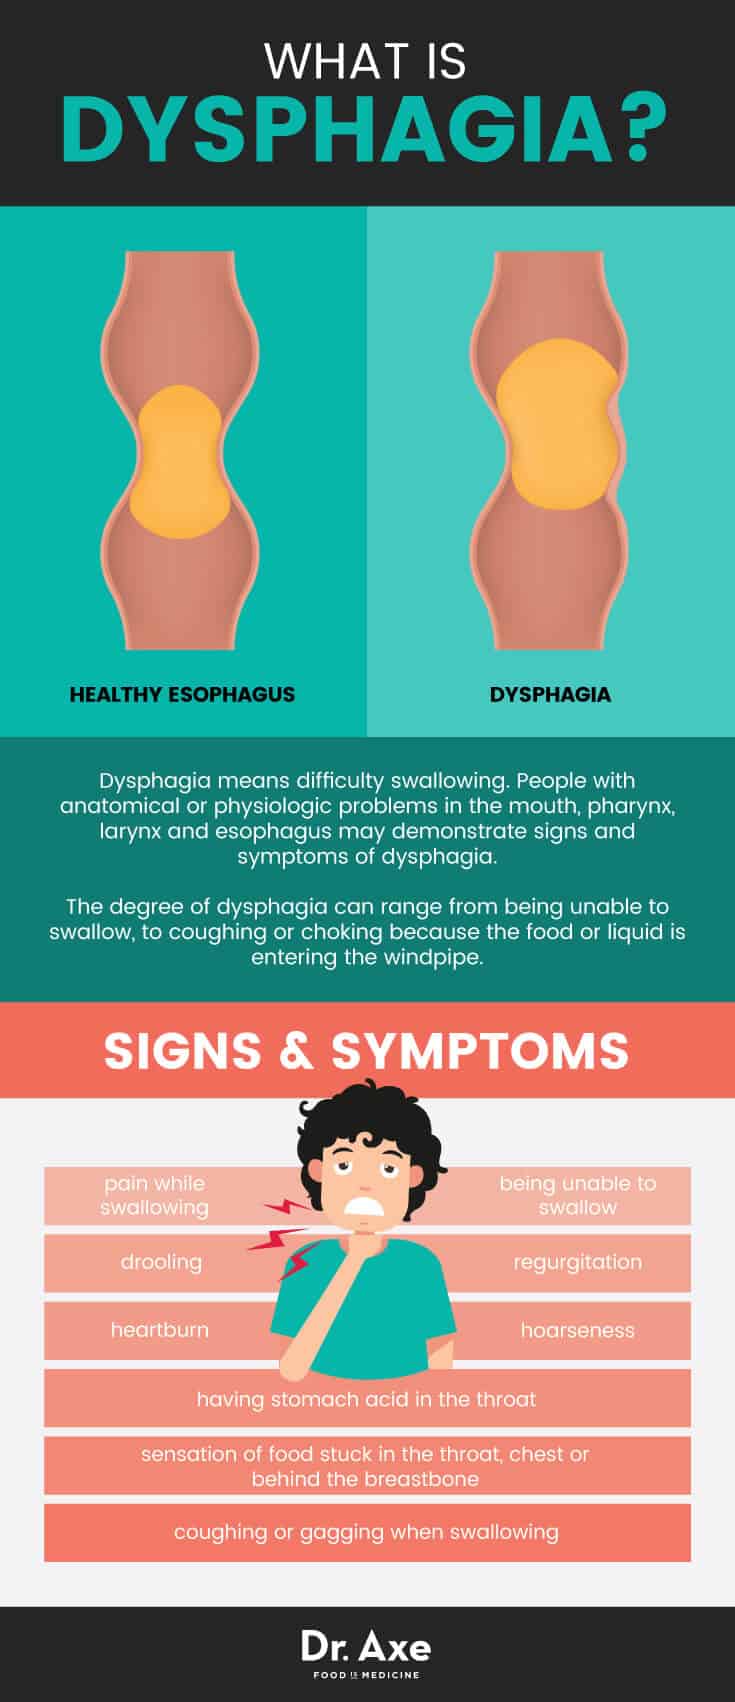 Dysphagia signs & symptoms